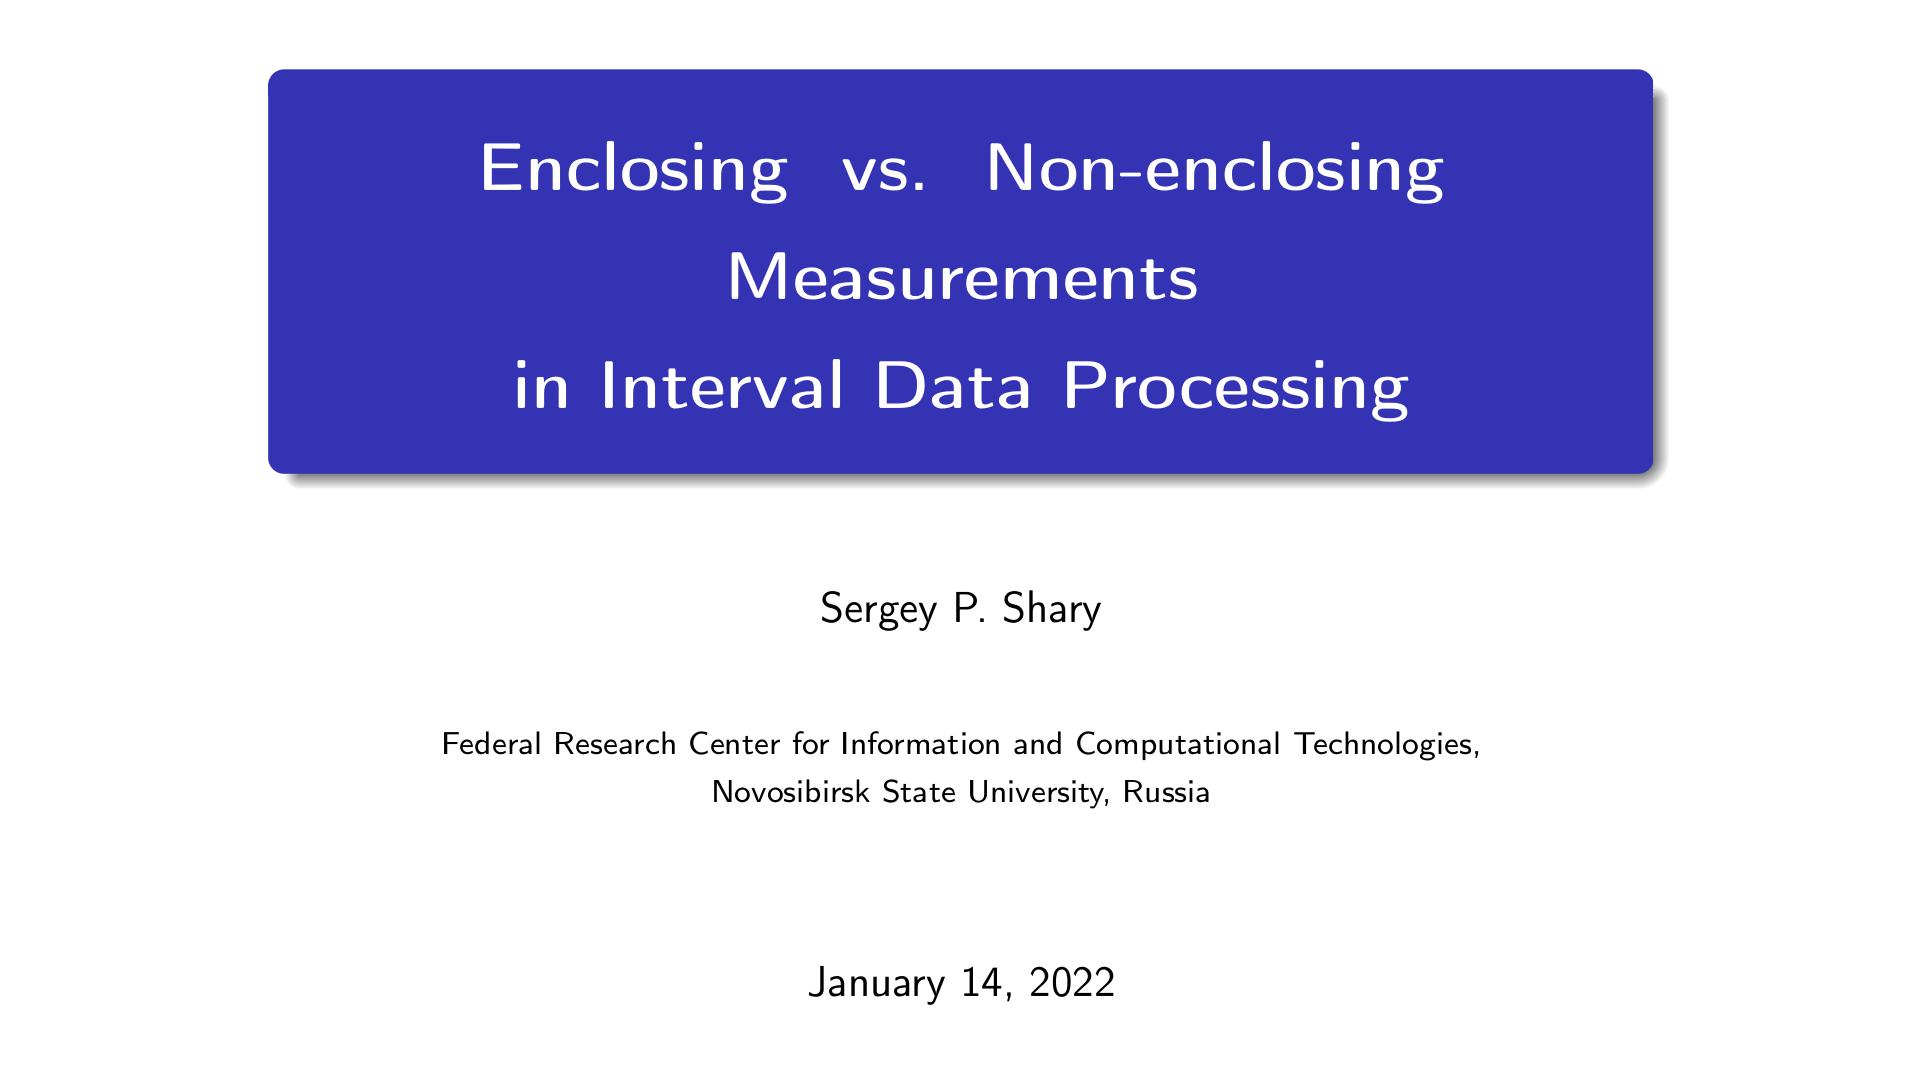 Enclosing vs. Non-enclosing Measurements in Interval Data Processing